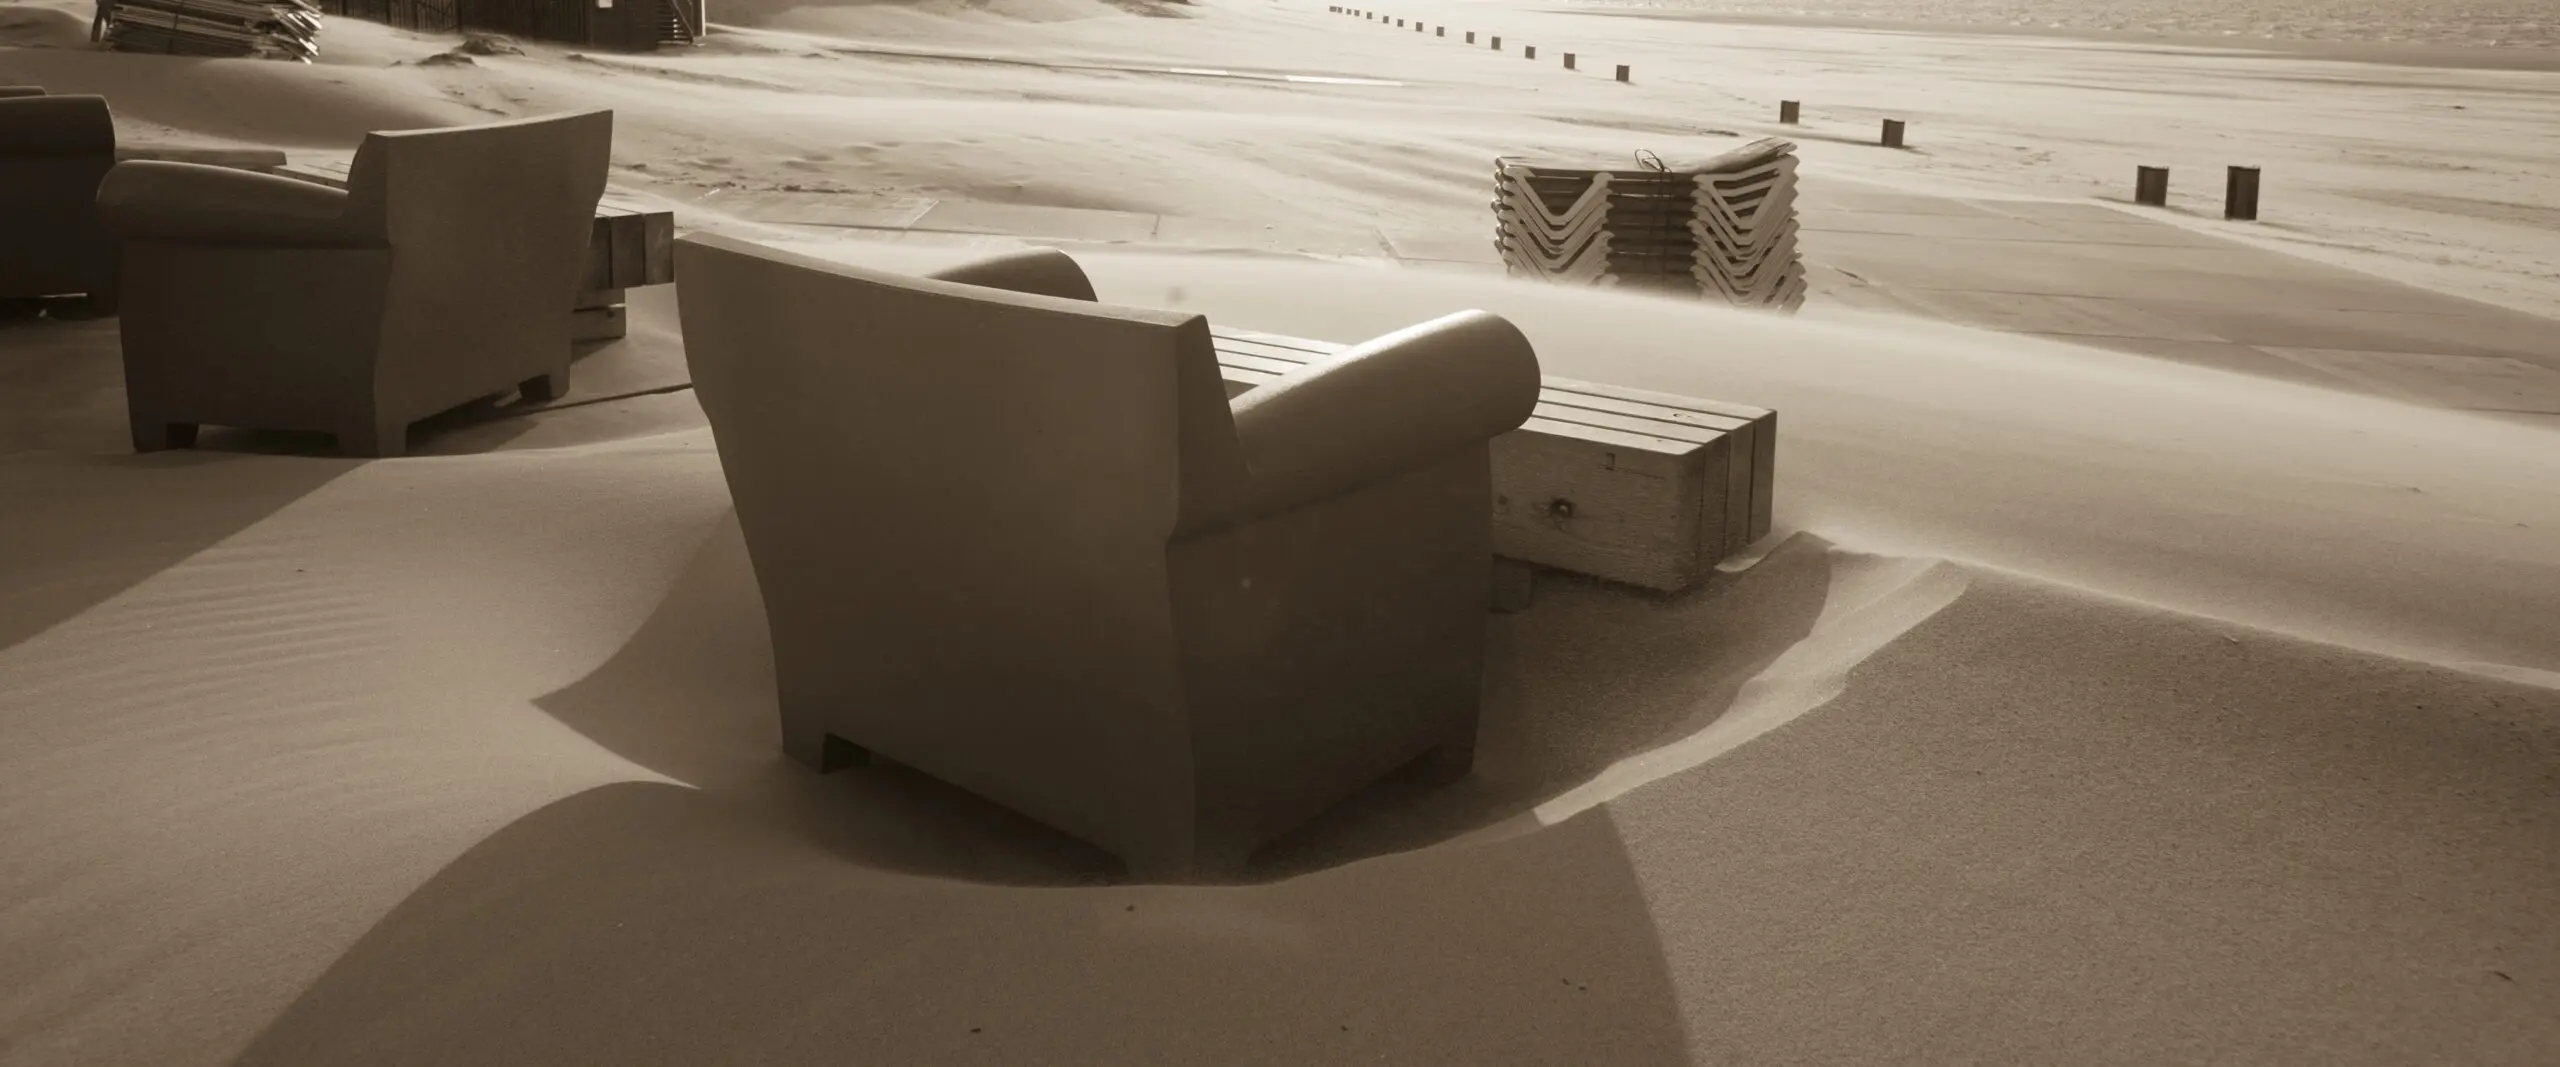 Wandbild (403) Take a seat präsentiert: Kreatives,Architektur,Landschaften,Strände